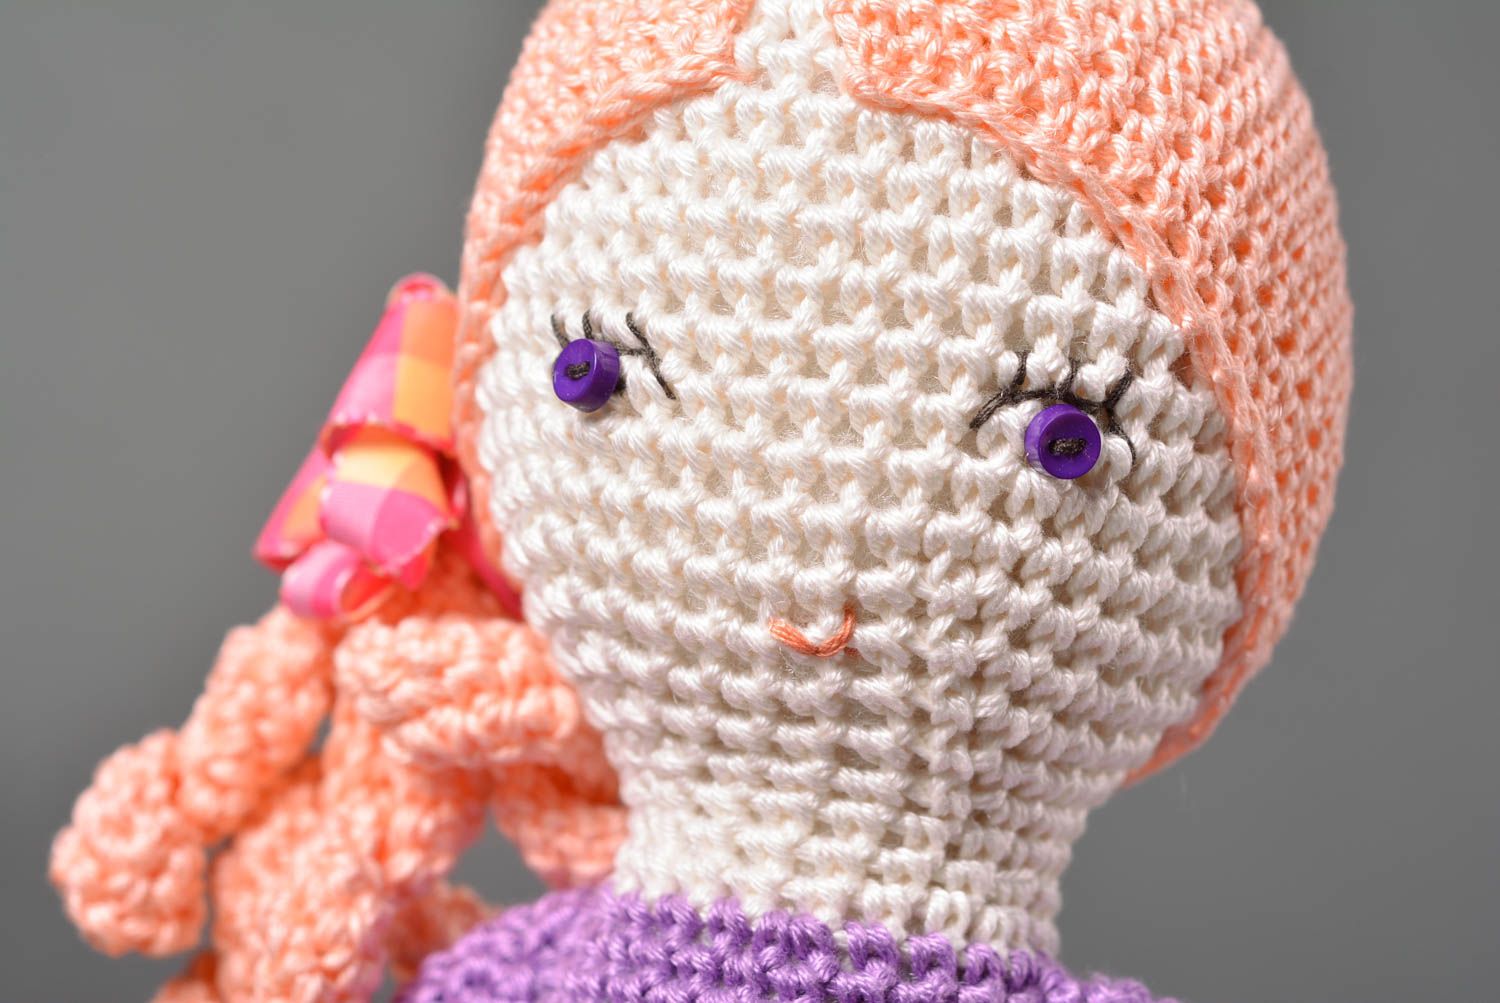 Handmade crochet toy stuffed toy soft toy for kids nursery design gift ideas photo 2